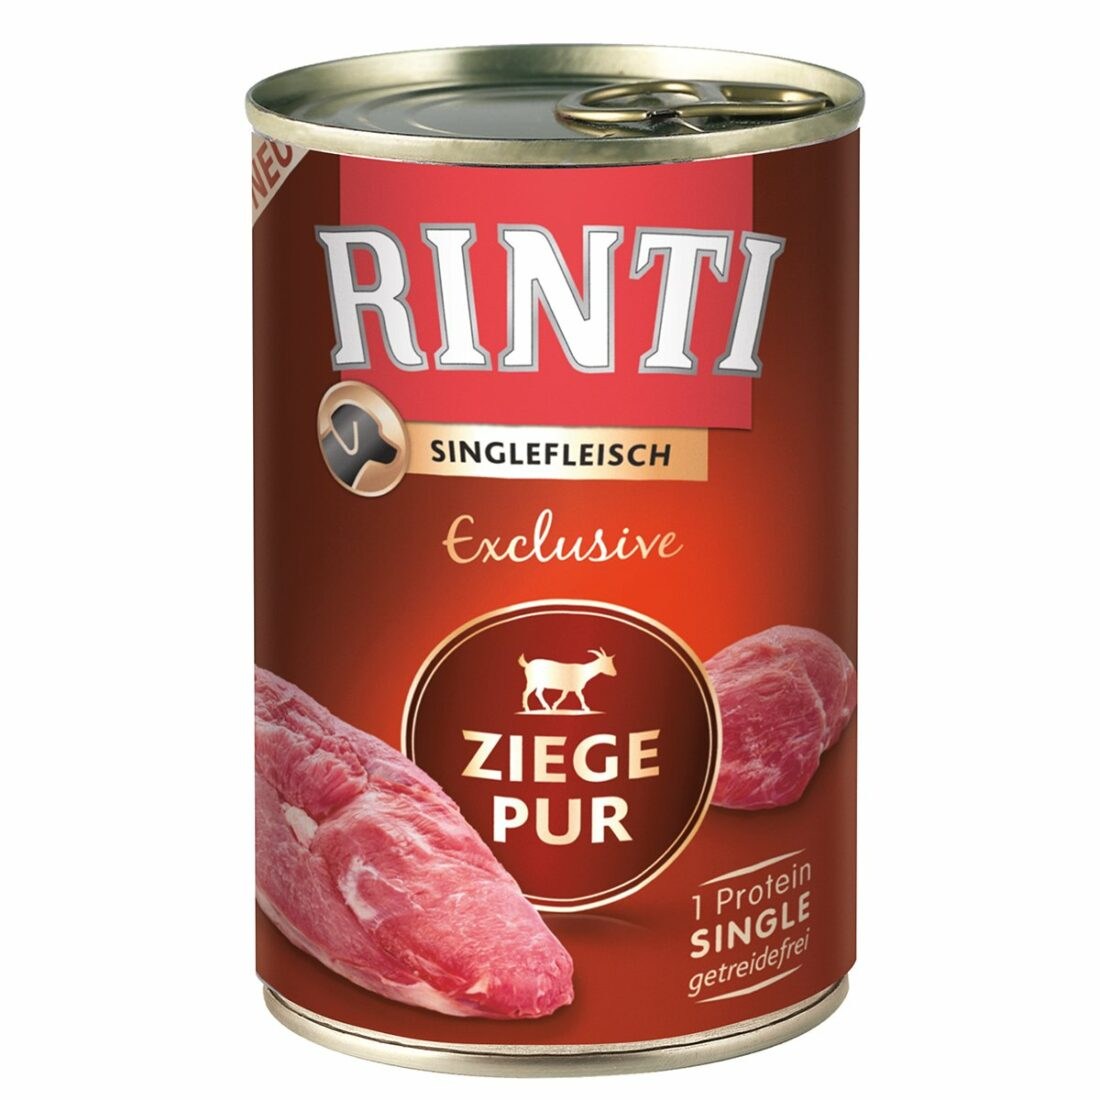 RINTI Singlefleisch Exclusive čisté kozí maso